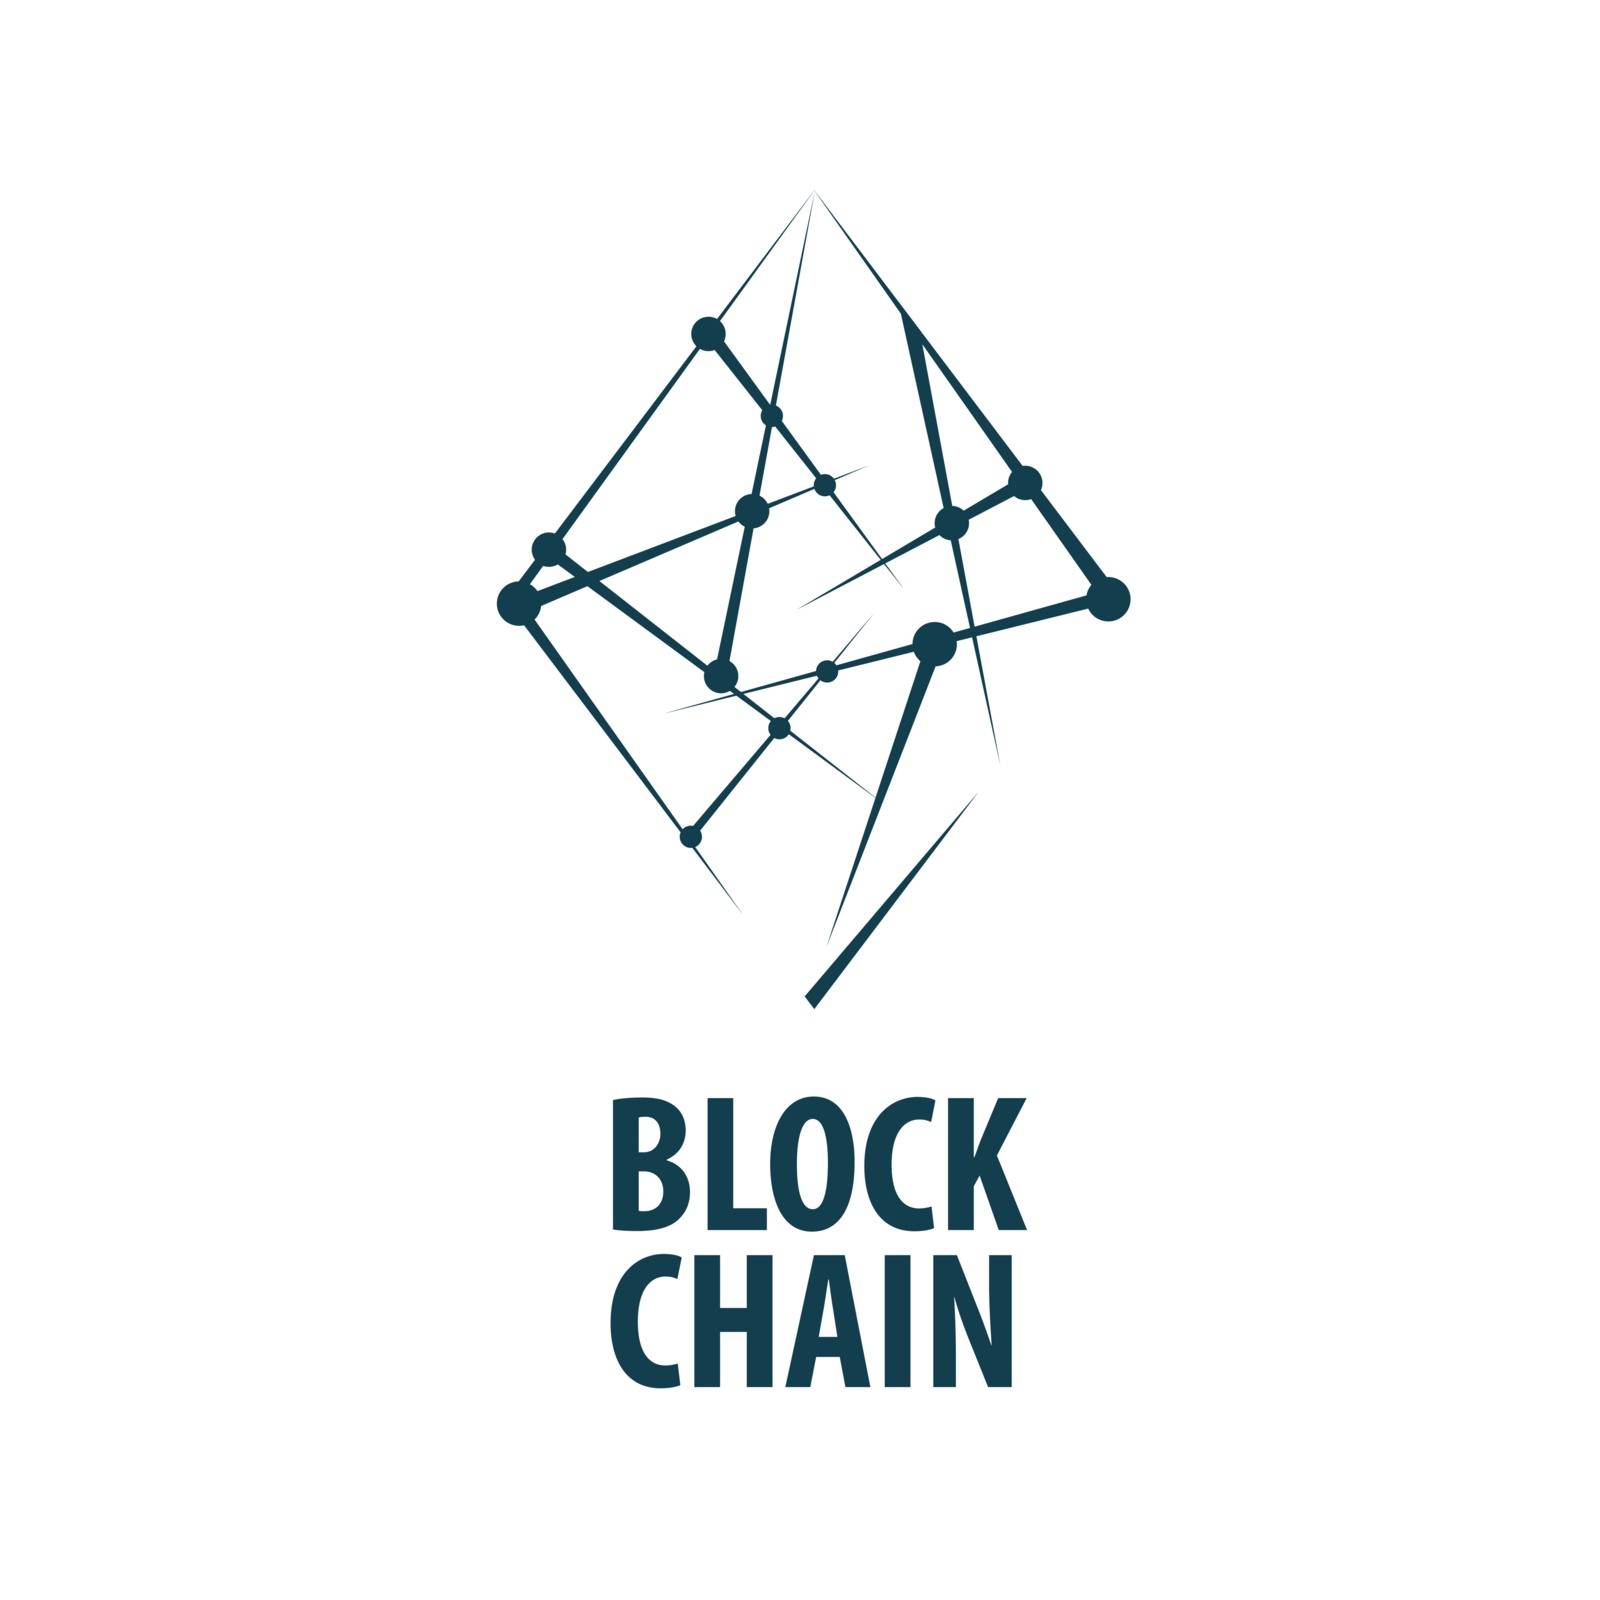 Vector logo blockchain. Abstract technological sign. Design element